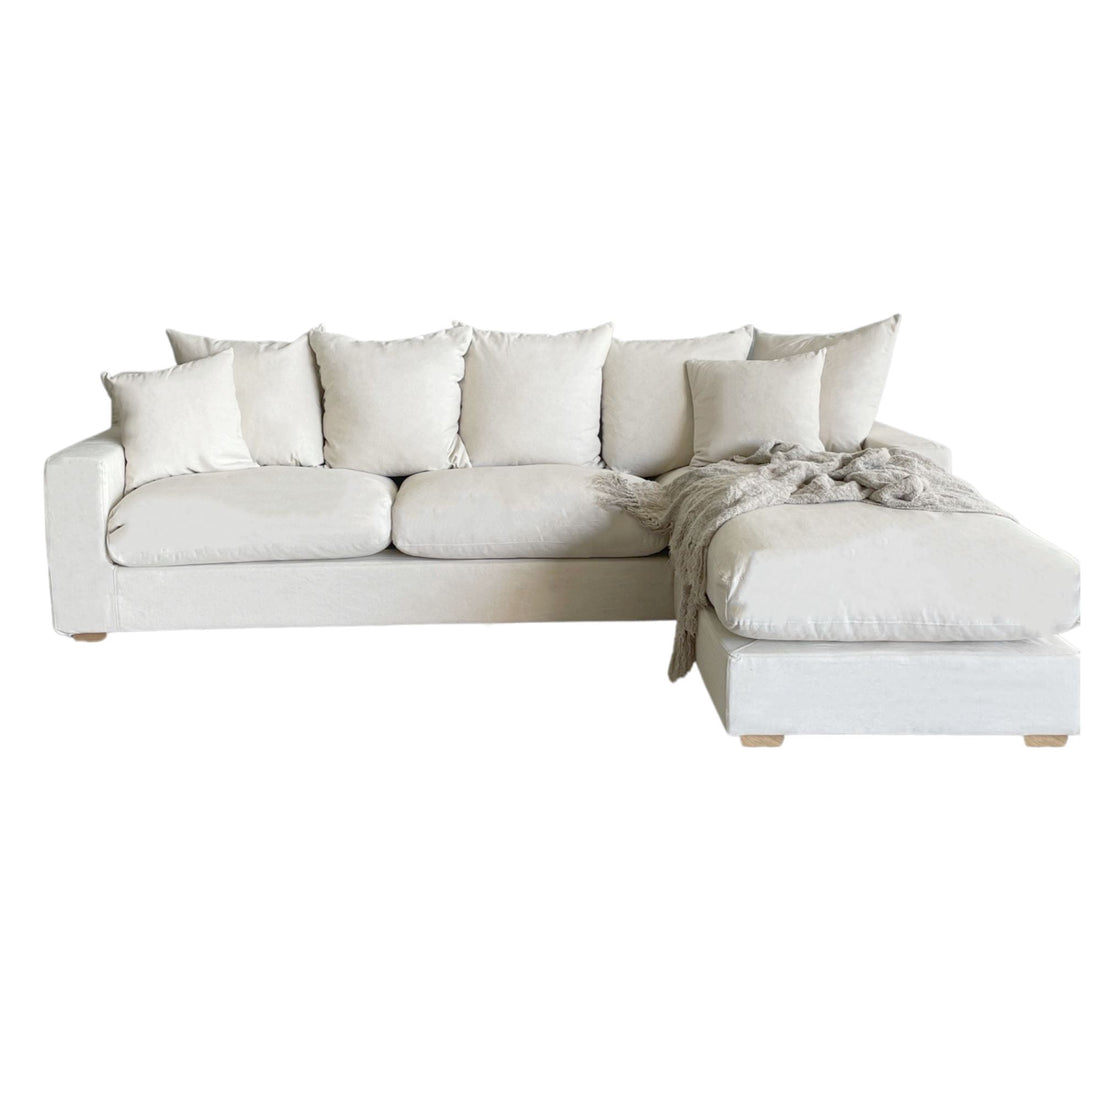 Clareville Sofa with Chaise Living Furniture Beachwood Designs Salt &amp; Pepper Linen Cotton 